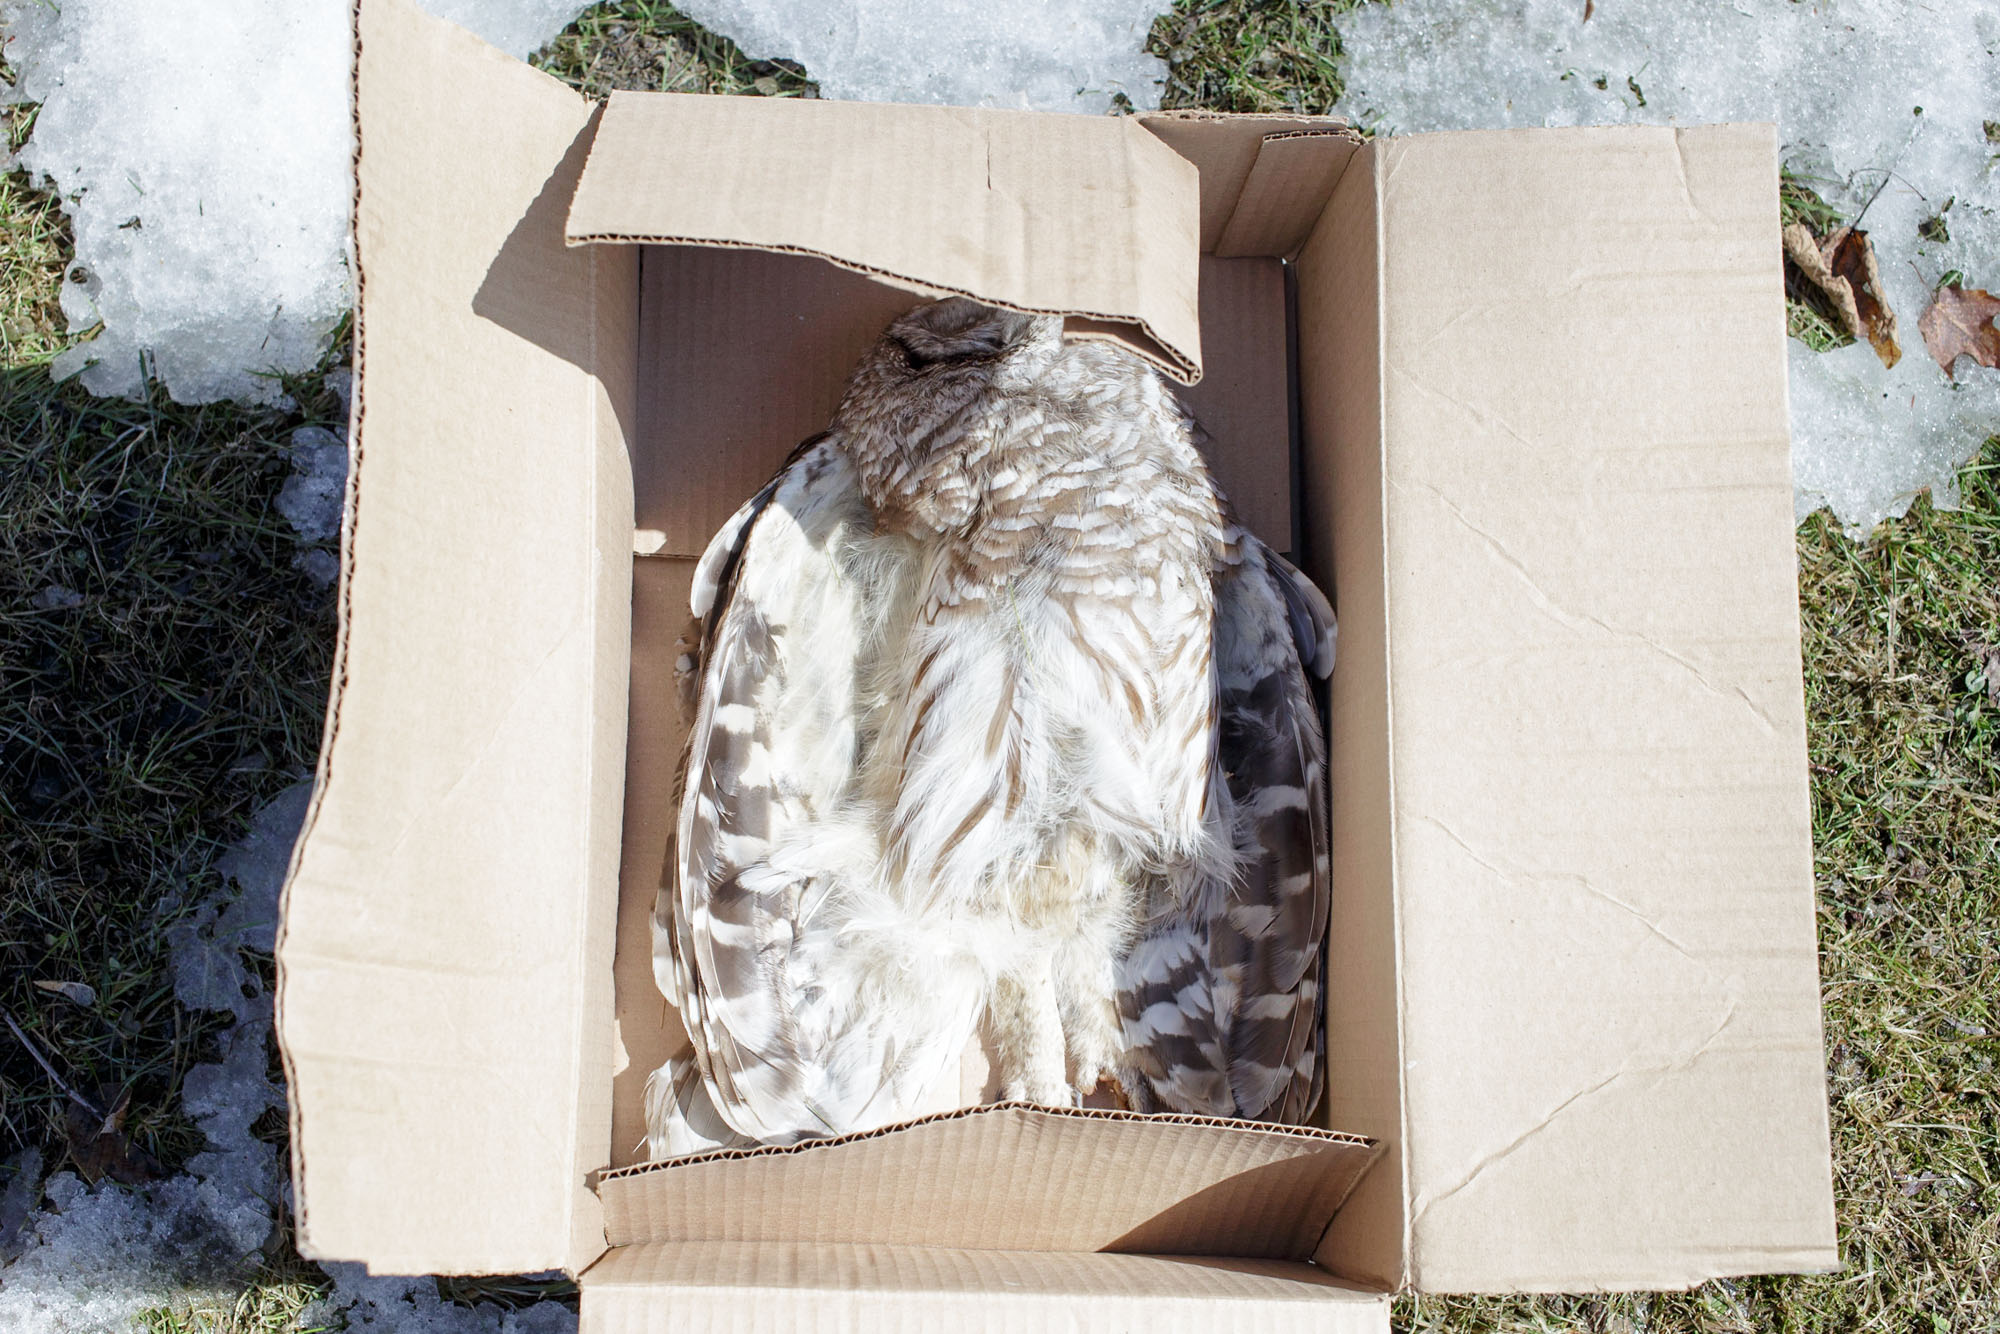 Dead Owl in a Box